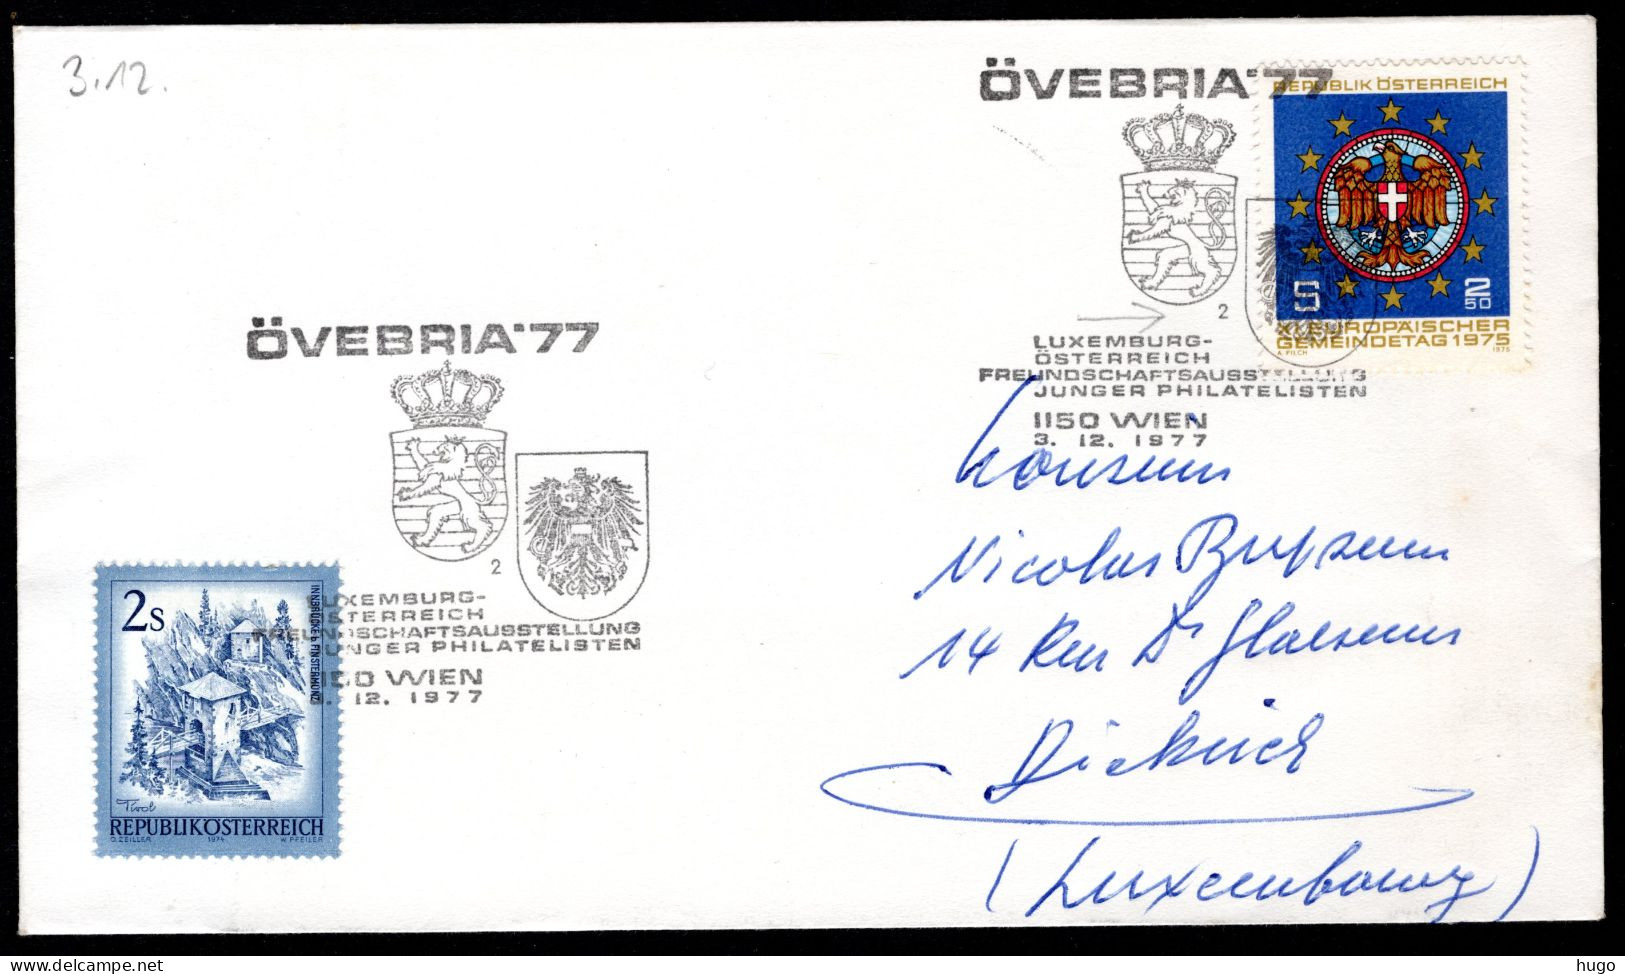 OOSTENRIJK Yt. Luxemburg - Osterreich Freundschaft 3-12-1977 ÖVEBRIA '77-1 - Covers & Documents